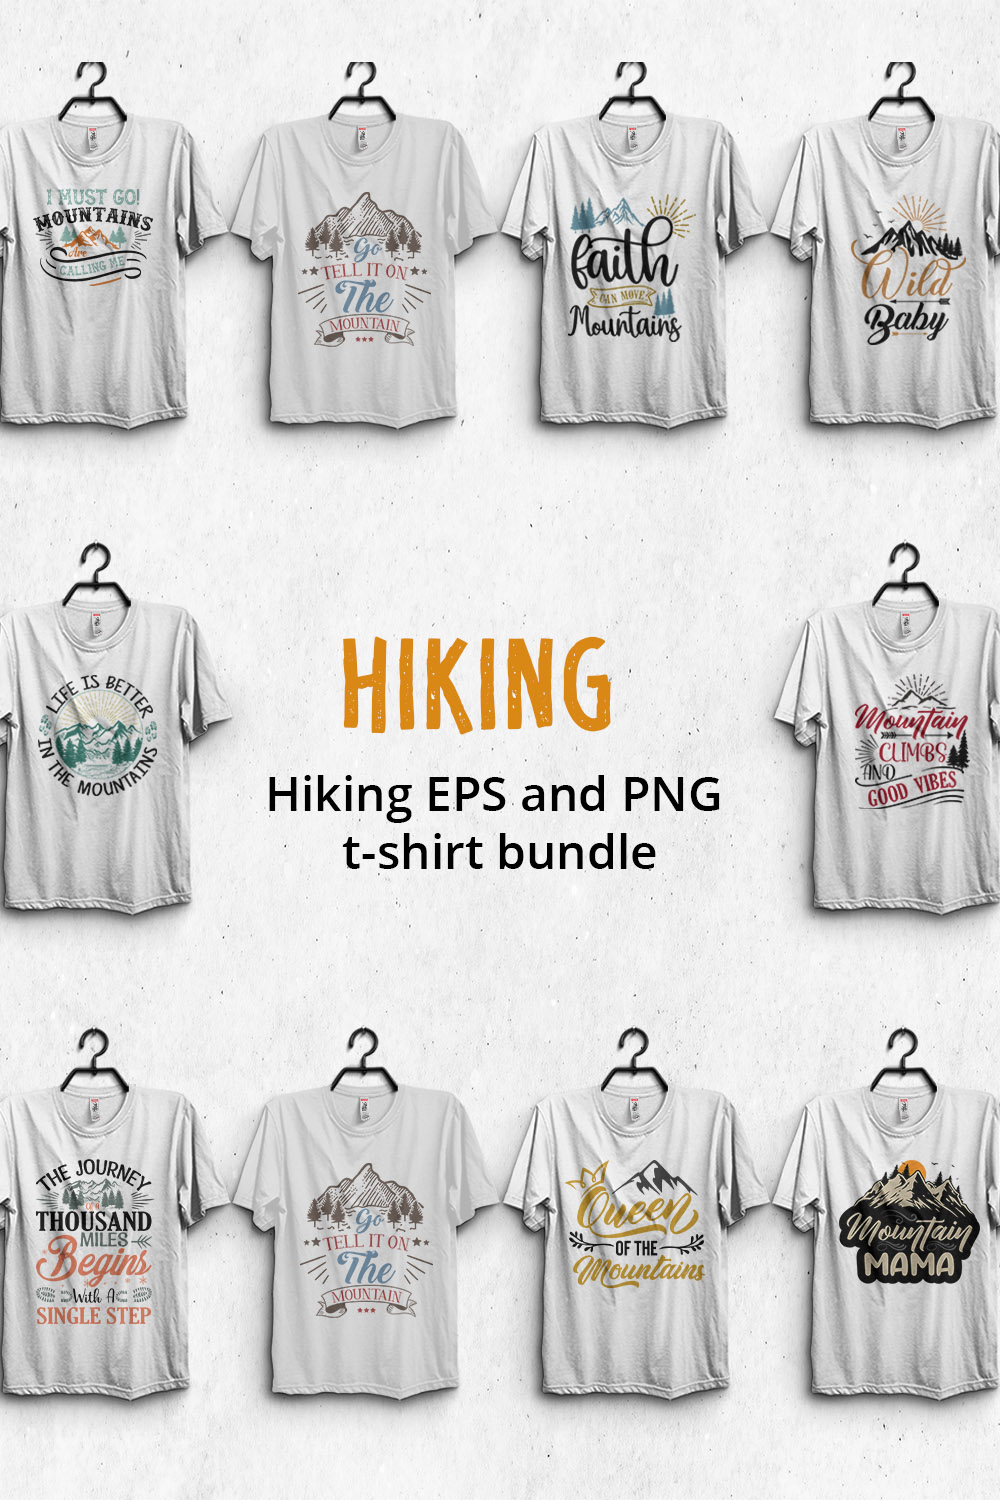 Hiking T-shirt design Bundle pinterest preview image.